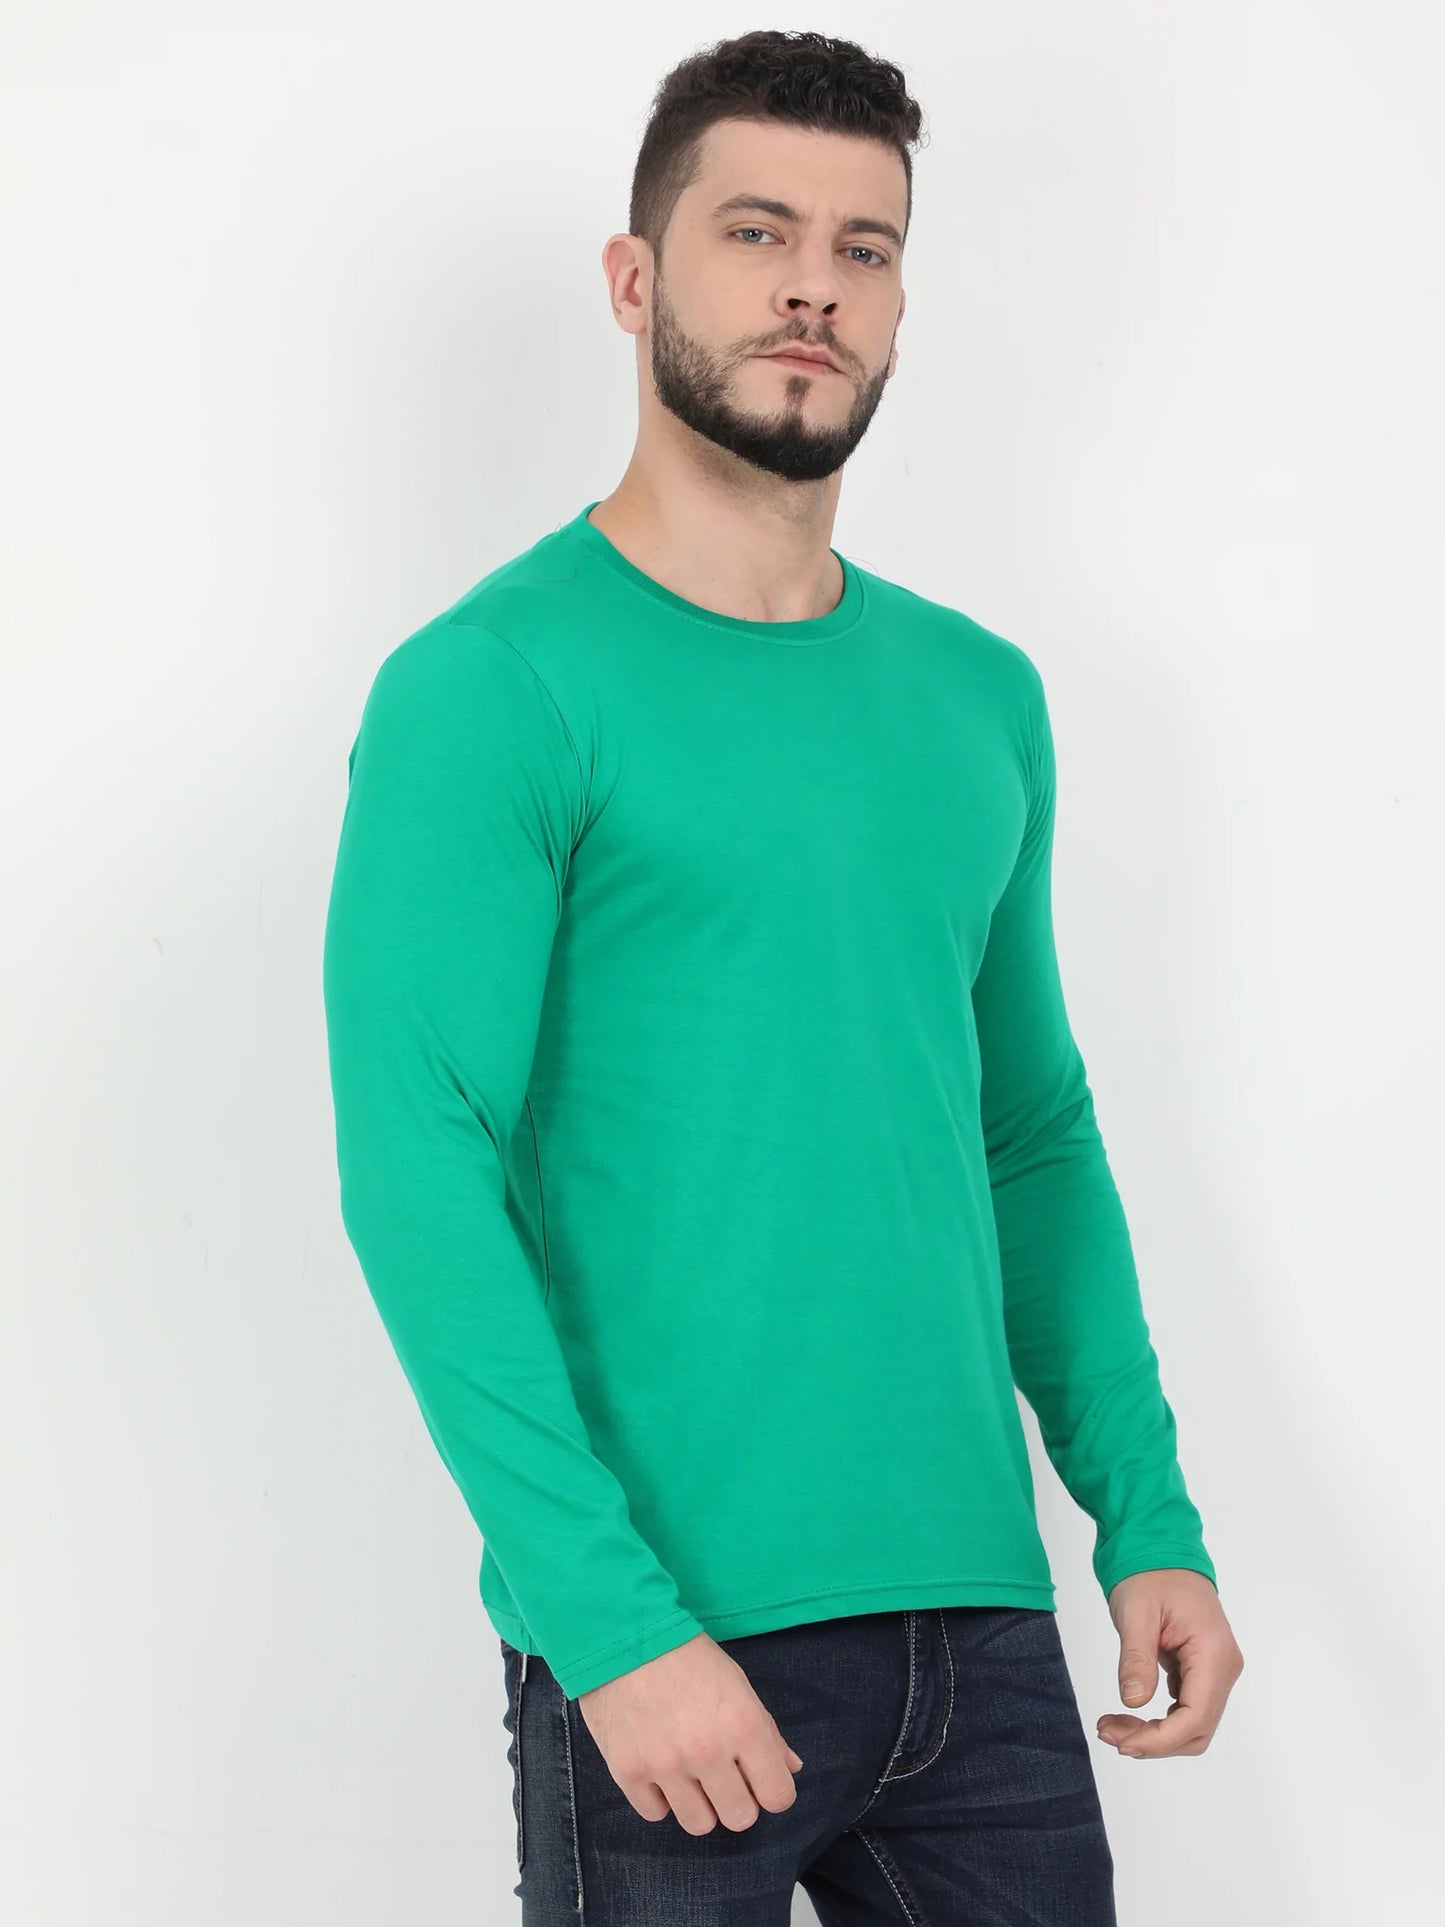 Men's Cotton Plain Round Neck Full Sleeve Pakistan Green Color T-Shirt